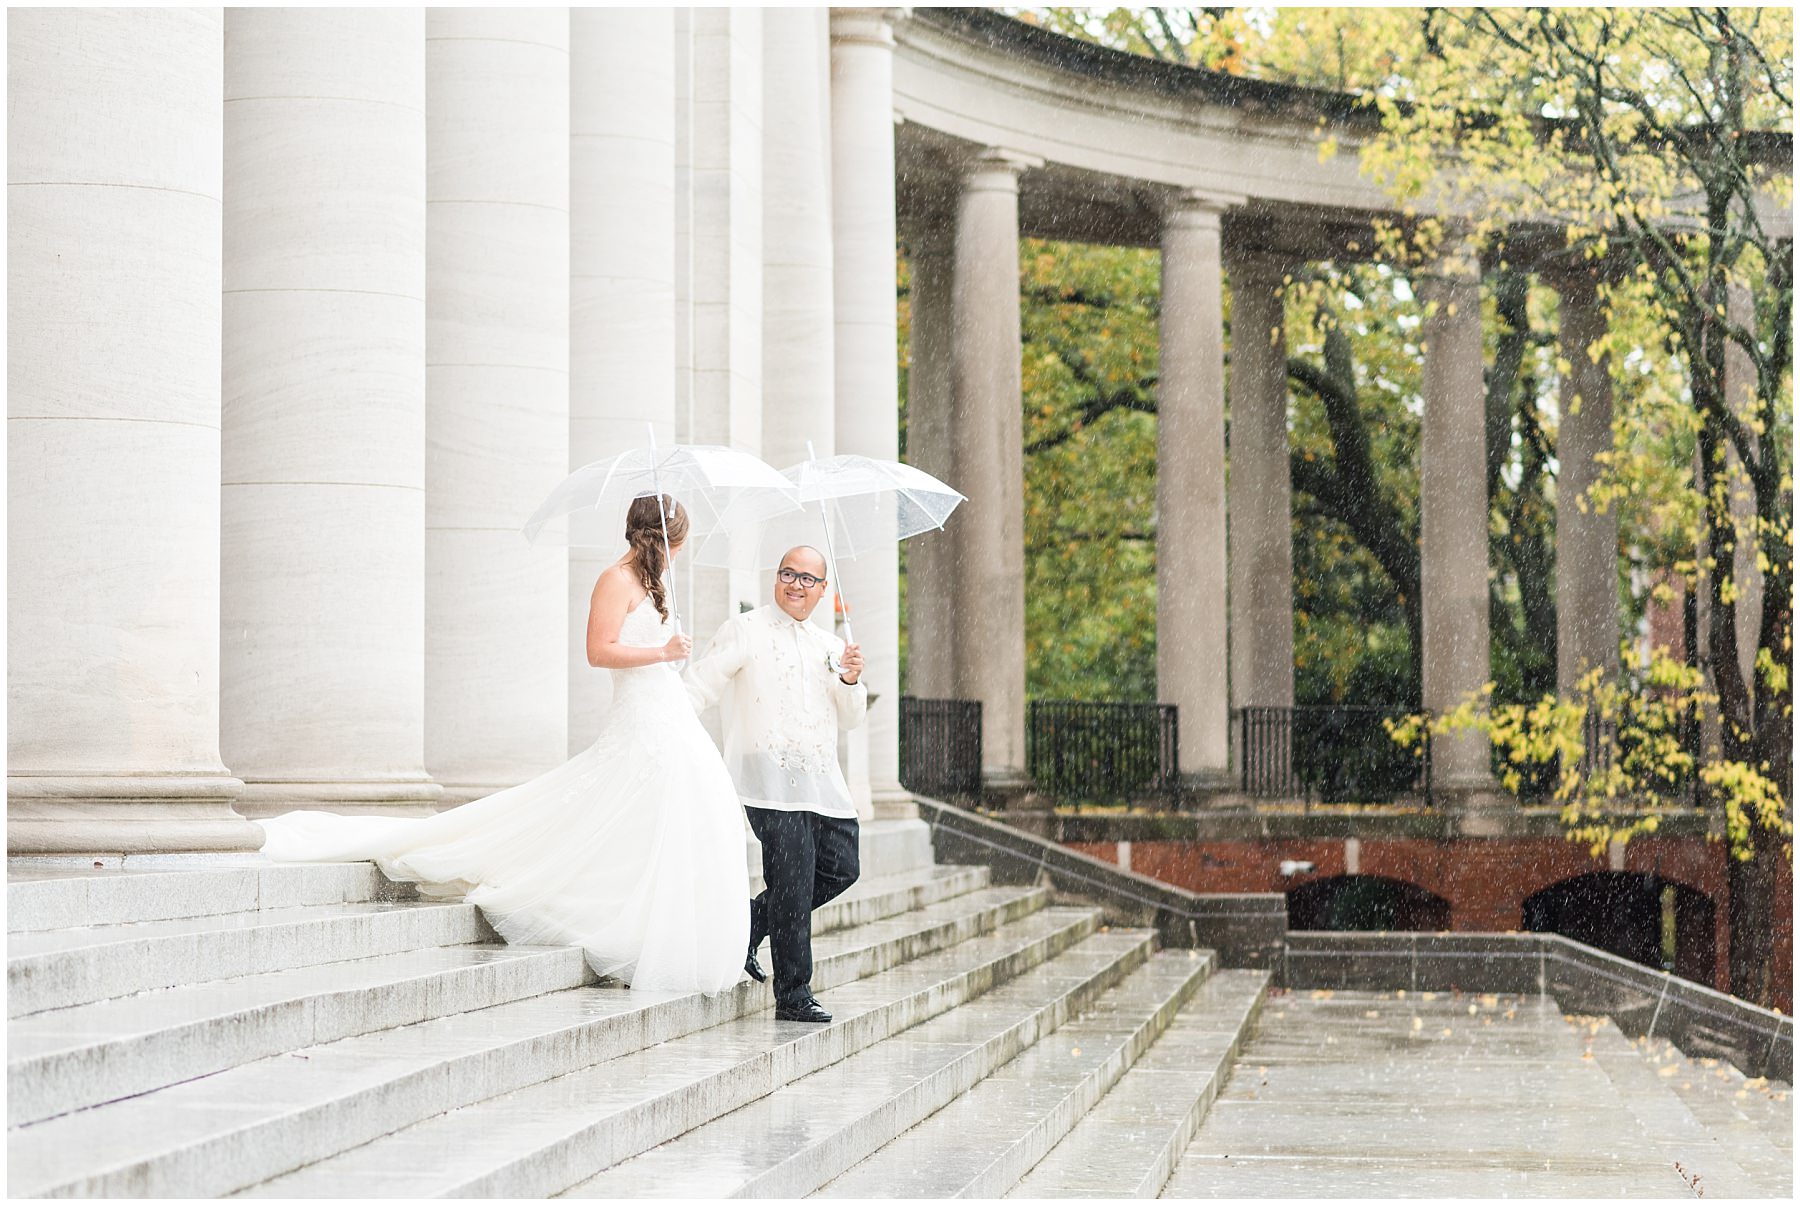 Raint day wedding portraits at Vanderbilt in Nashville, TN